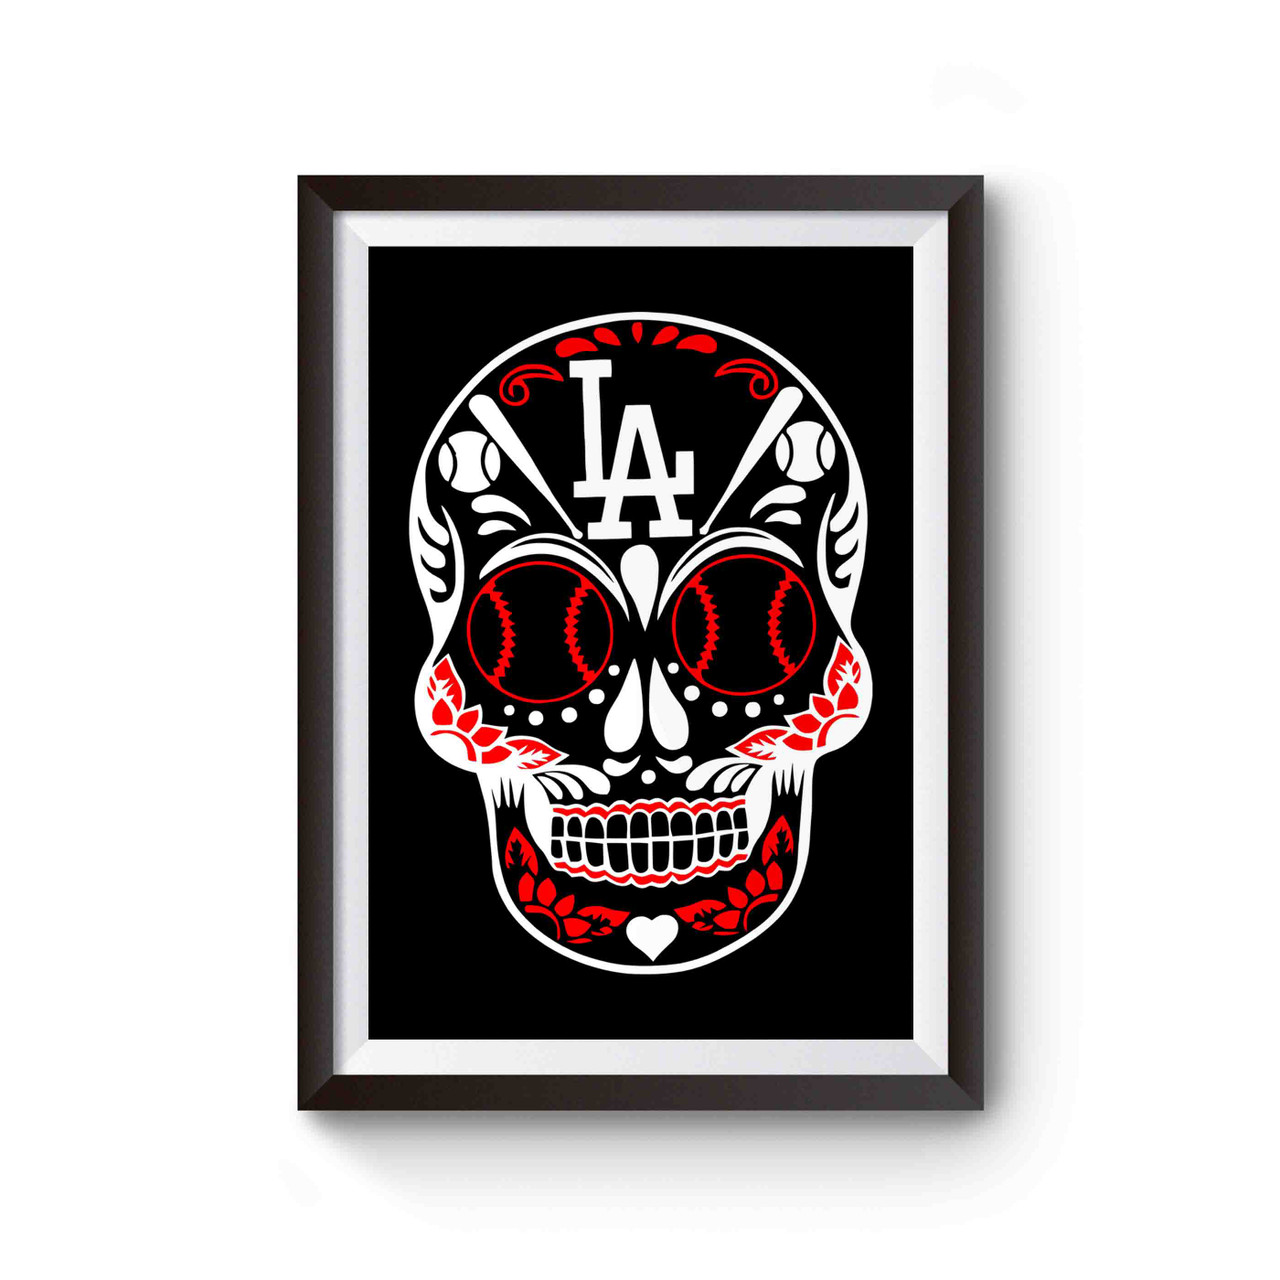 Skull Dia De Los Los Angeles Dodgers shirt, hoodie and sweater